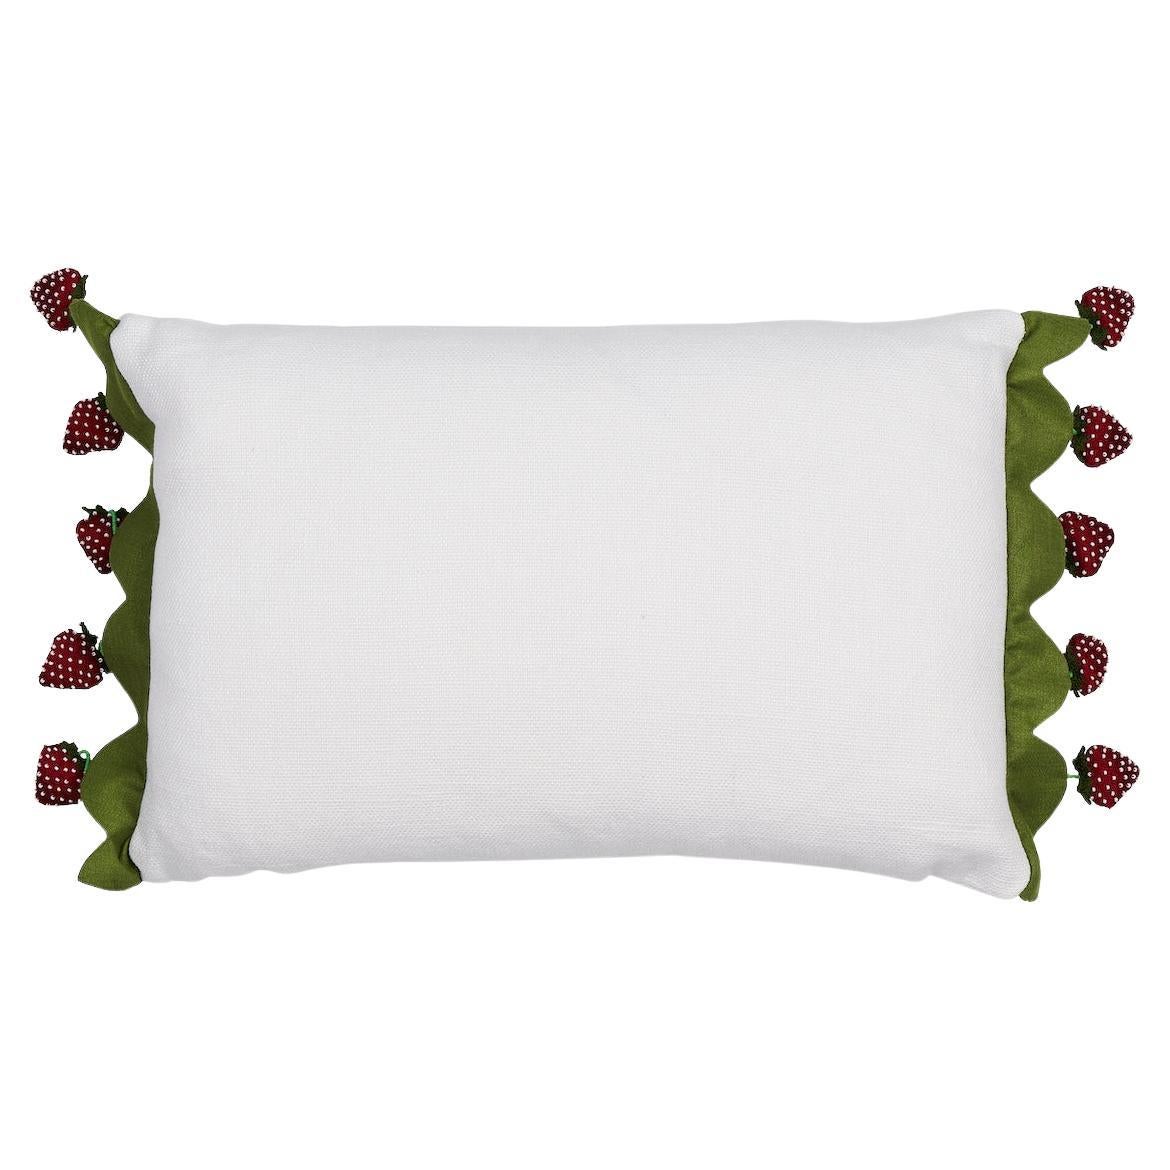 Schumacher Strawberry Jam 18x12" Pillow in Green For Sale